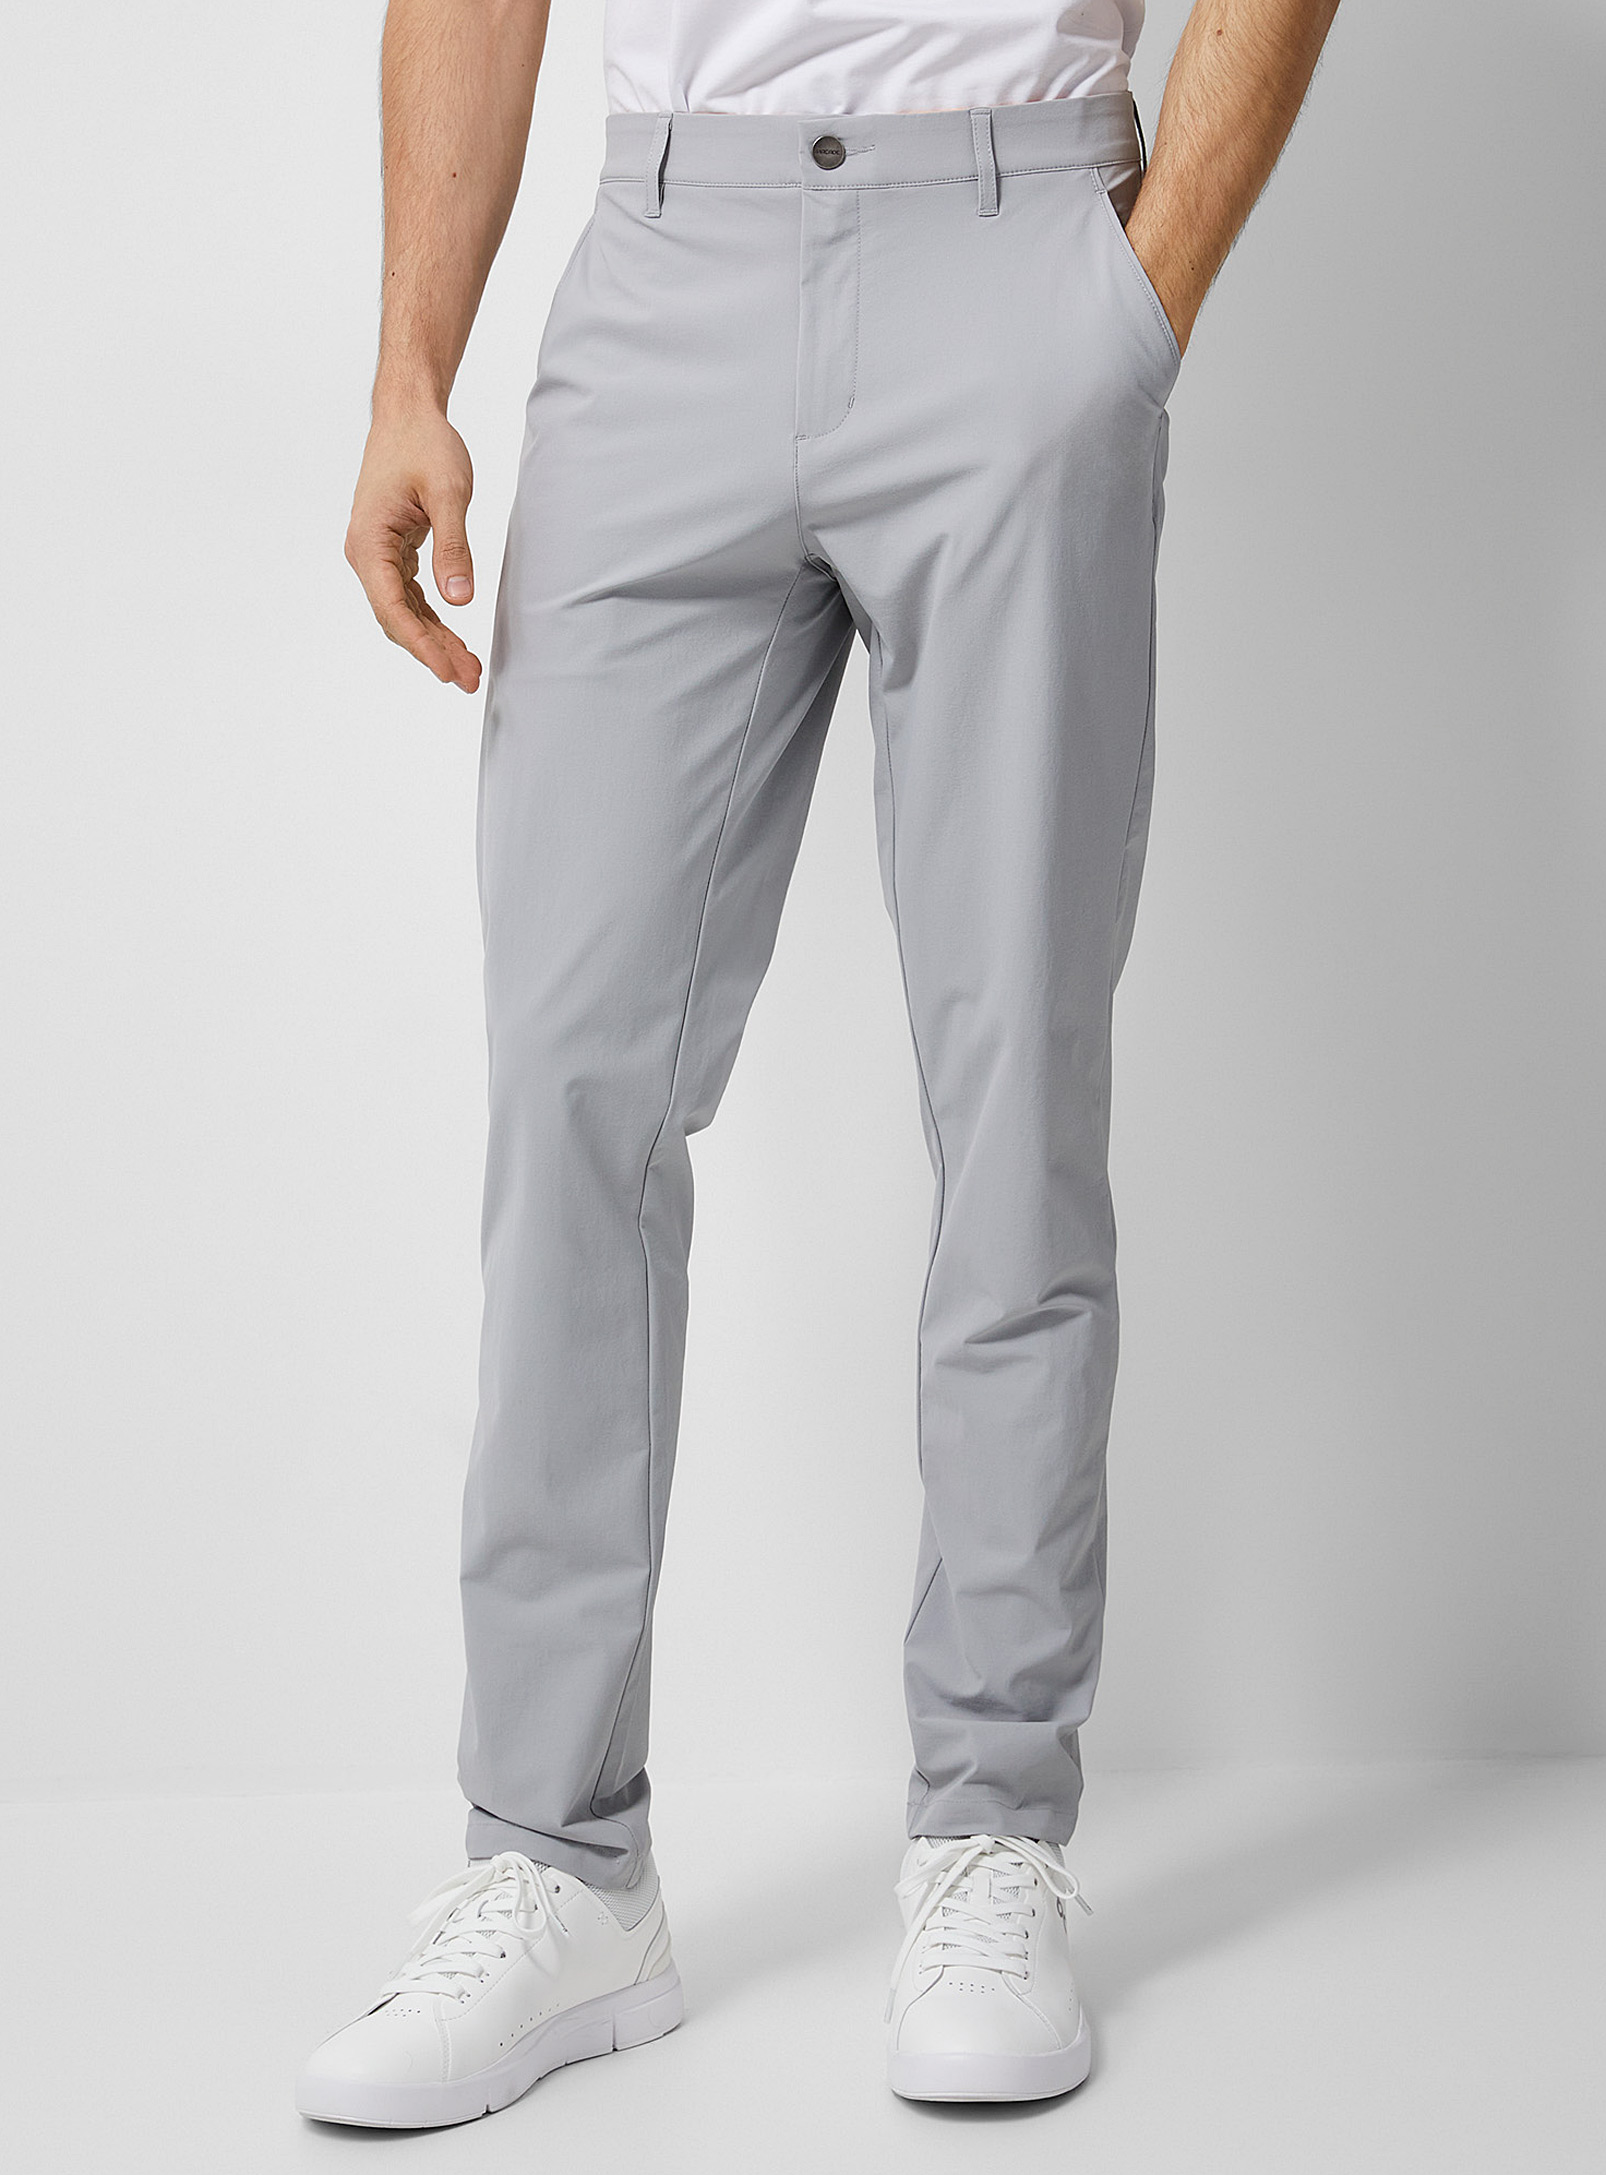 Macade - Le pantalon de golf extensible Lightweight